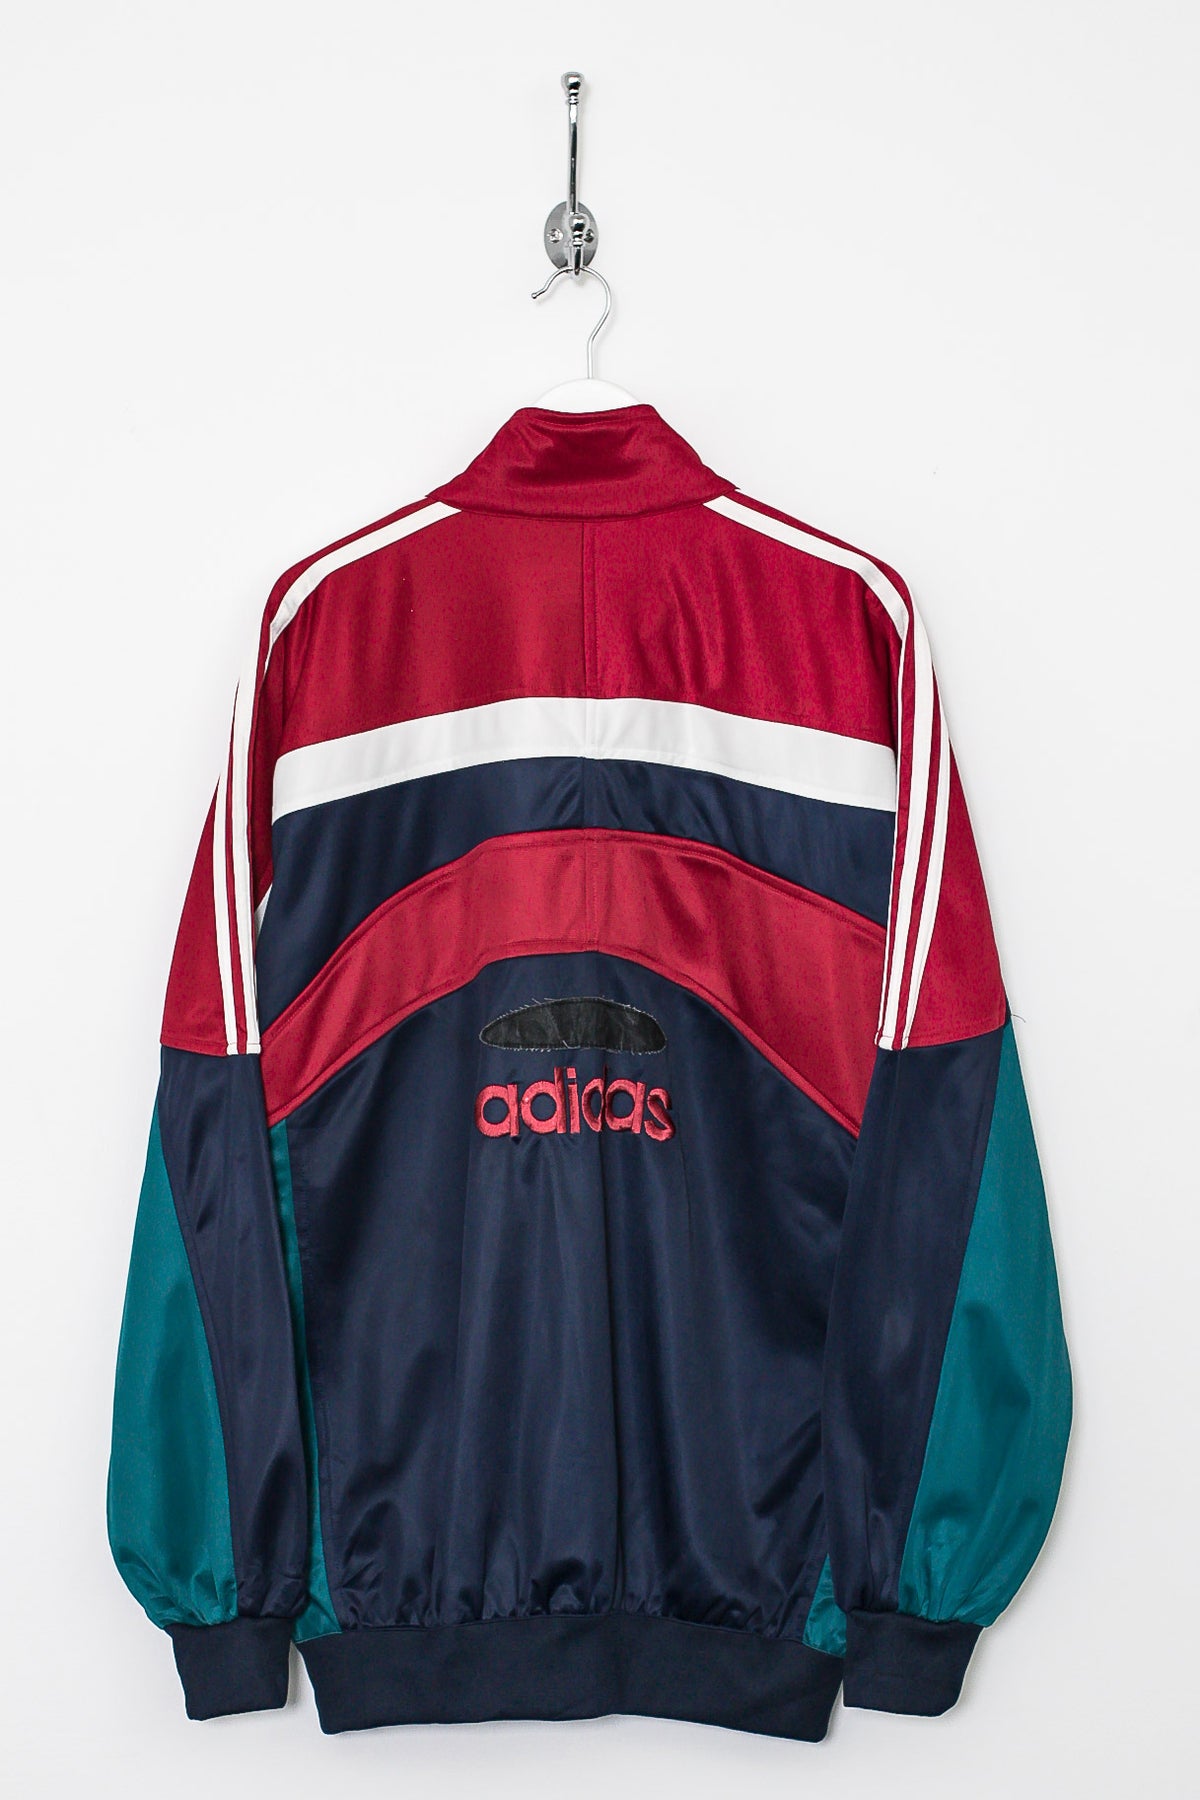 90s Adidas Team Jacket (XL)